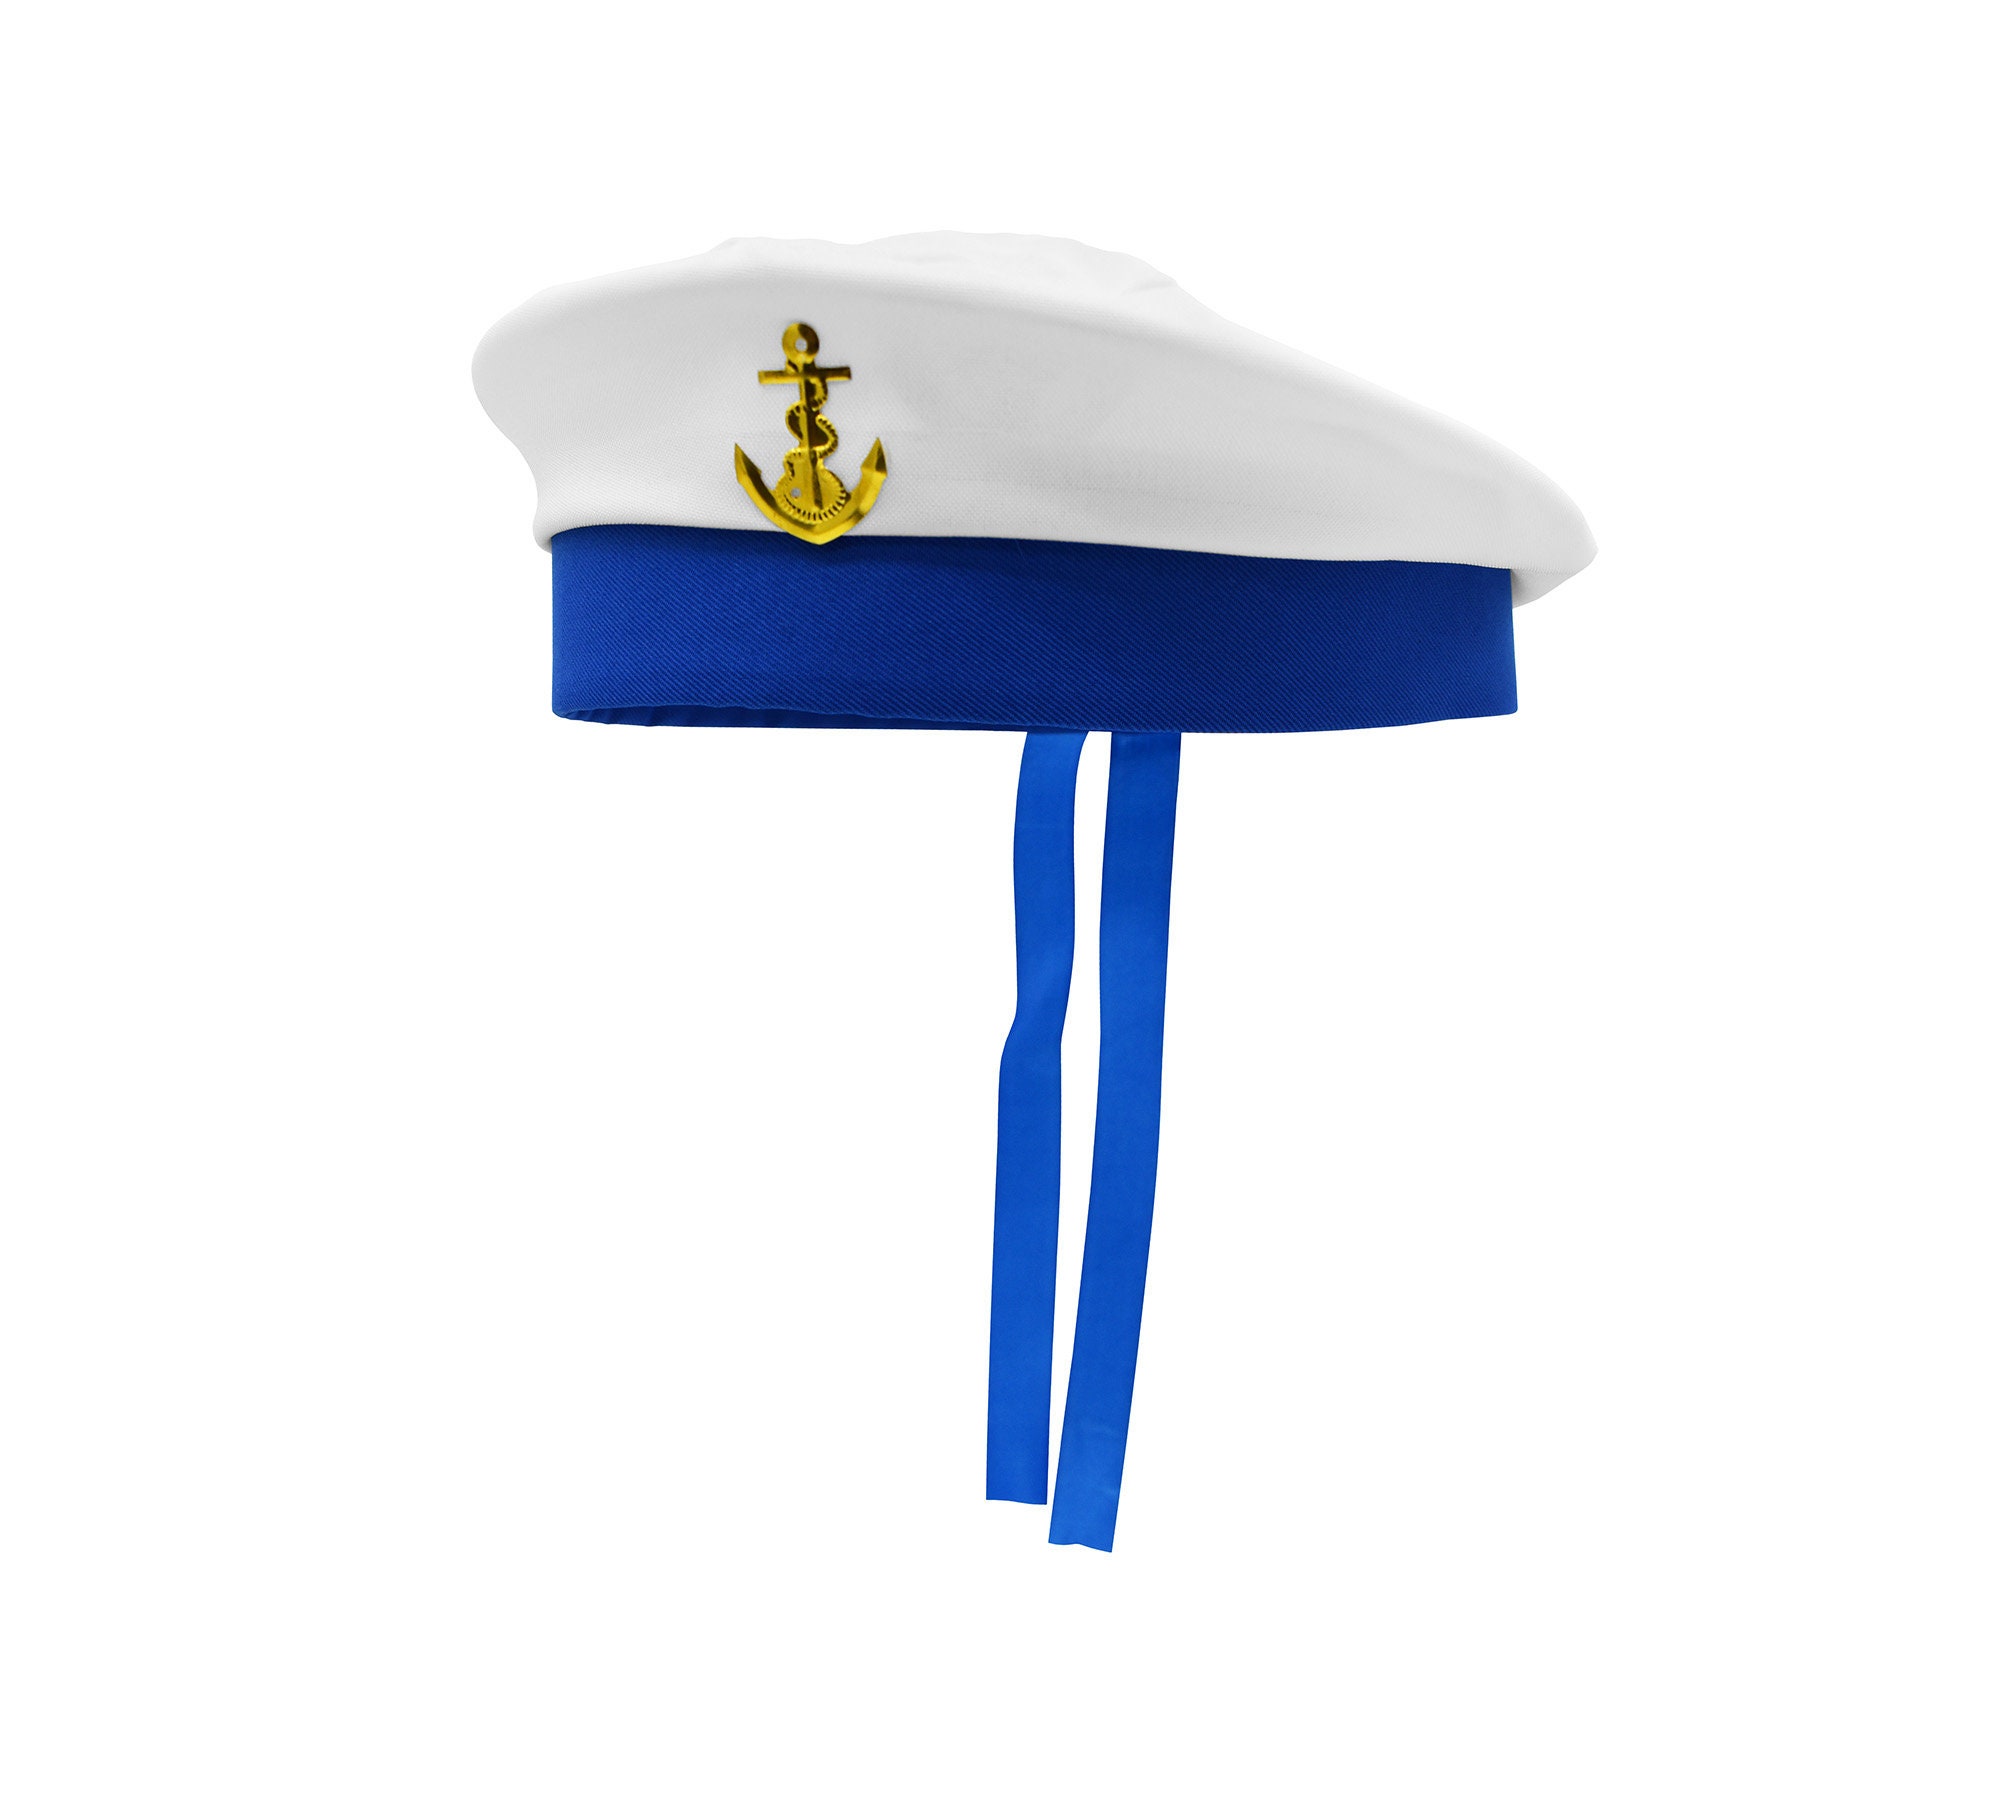 Sheepskin creative artist Baker hat blue navy blue captain hat